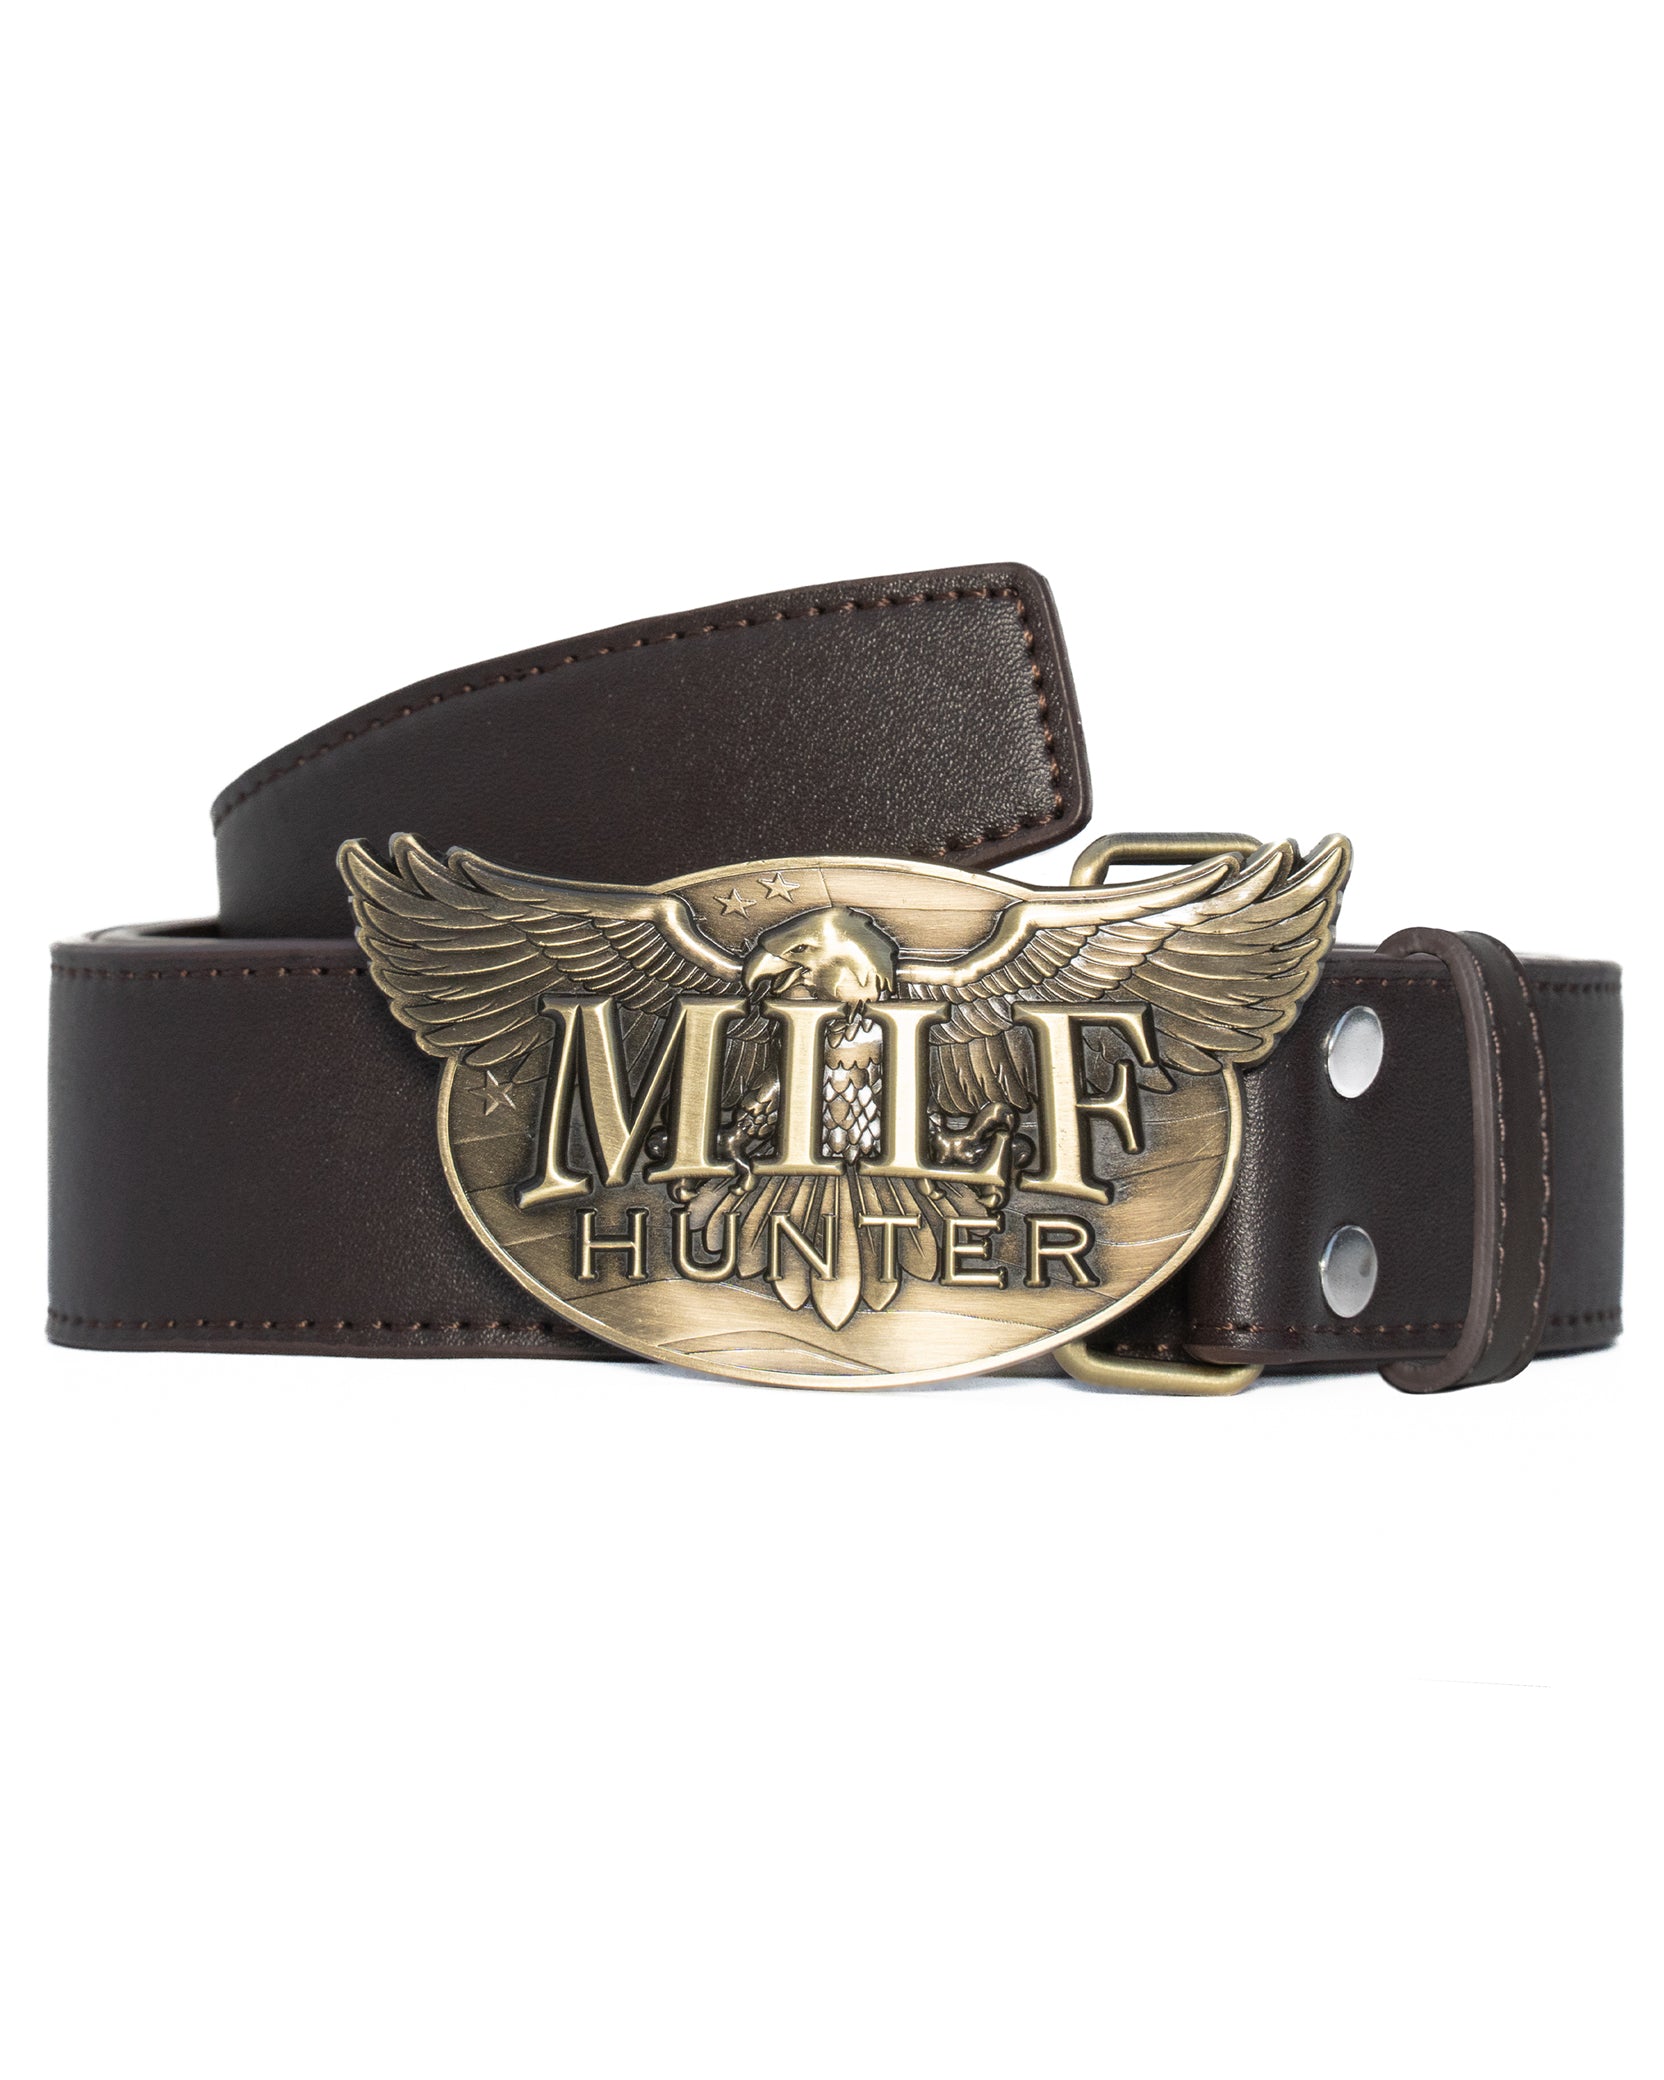 MlLF Hunter Leather Belt - Brown / Bronze